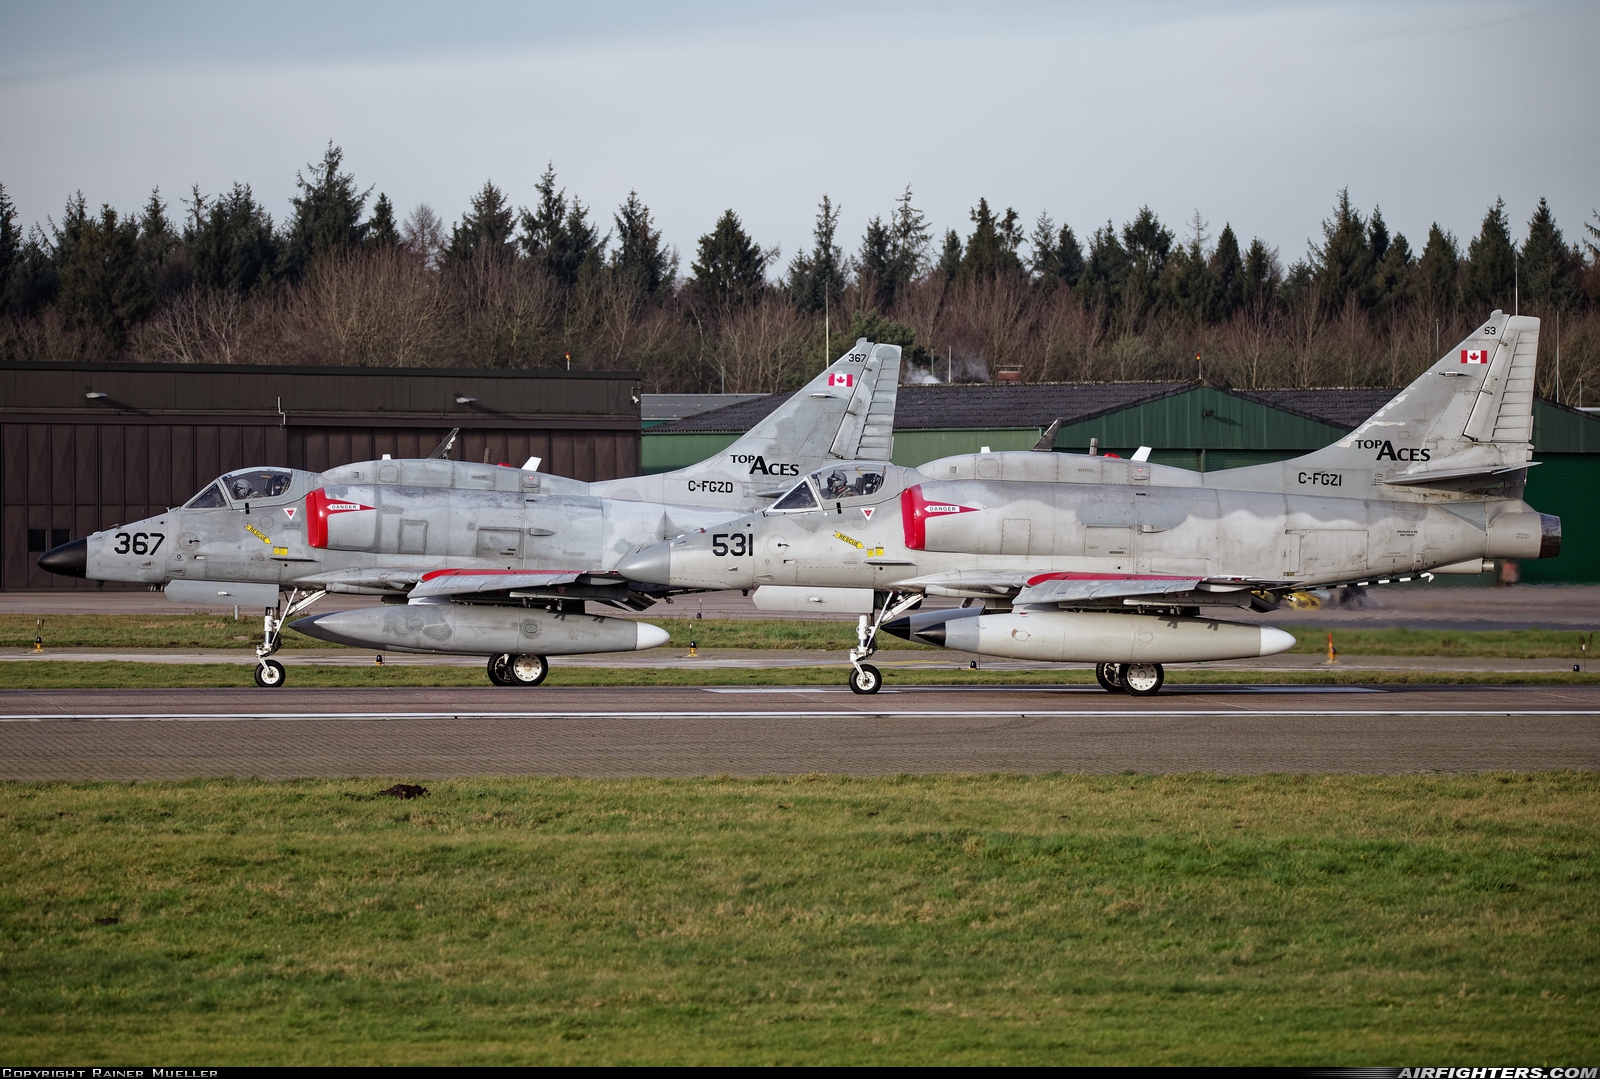 Company Owned - Top Aces (ATSI) Douglas A-4N Skyhawk C-FGZI at Wittmundhafen (Wittmund) (ETNT), Germany